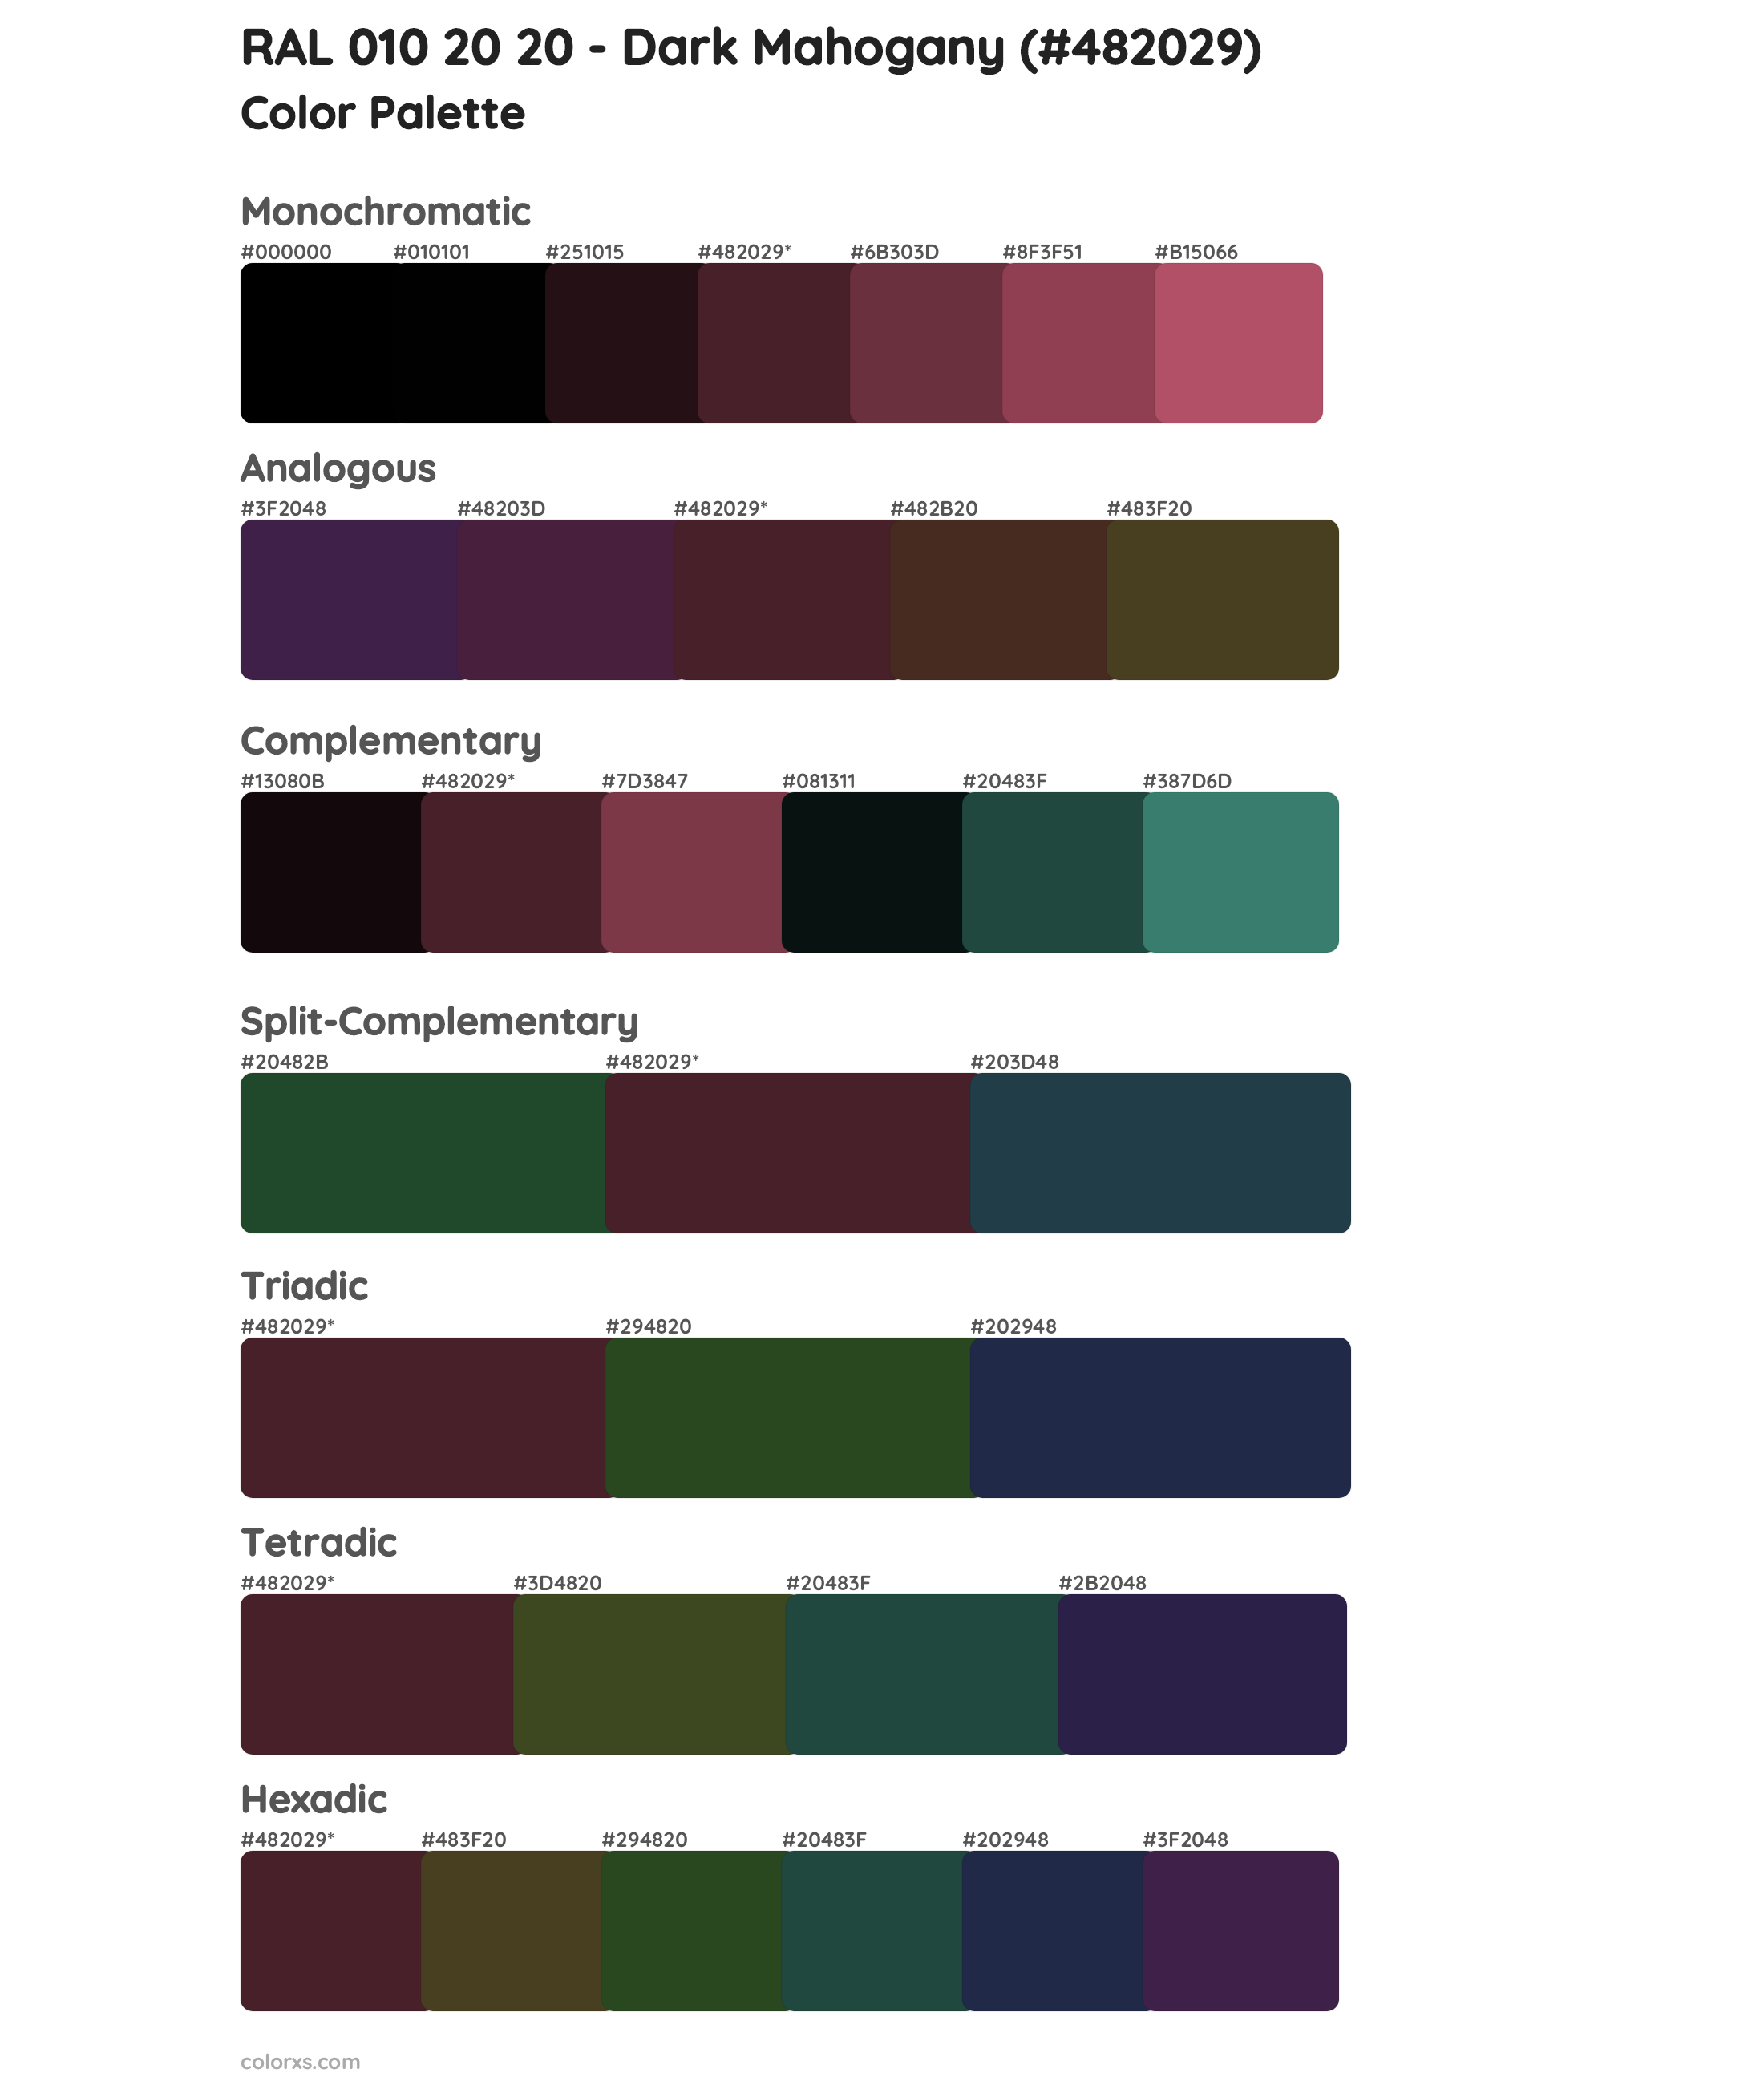 RAL 010 20 20 - Dark Mahogany Color Scheme Palettes